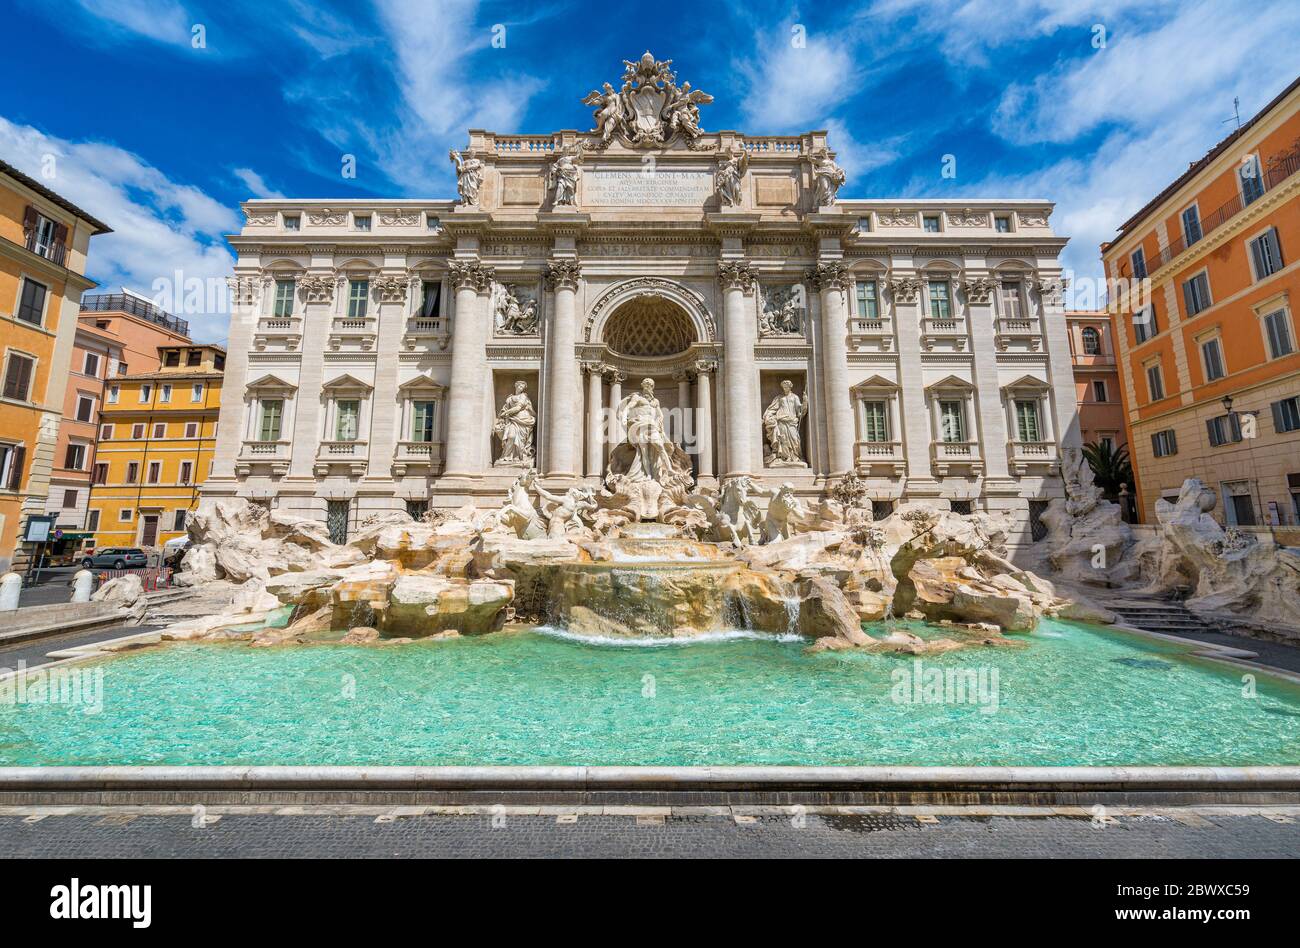 The marvellous Trevi Fountain (Fontana di Trevi) in Rome on a sunny day, Italy. Stock Photo